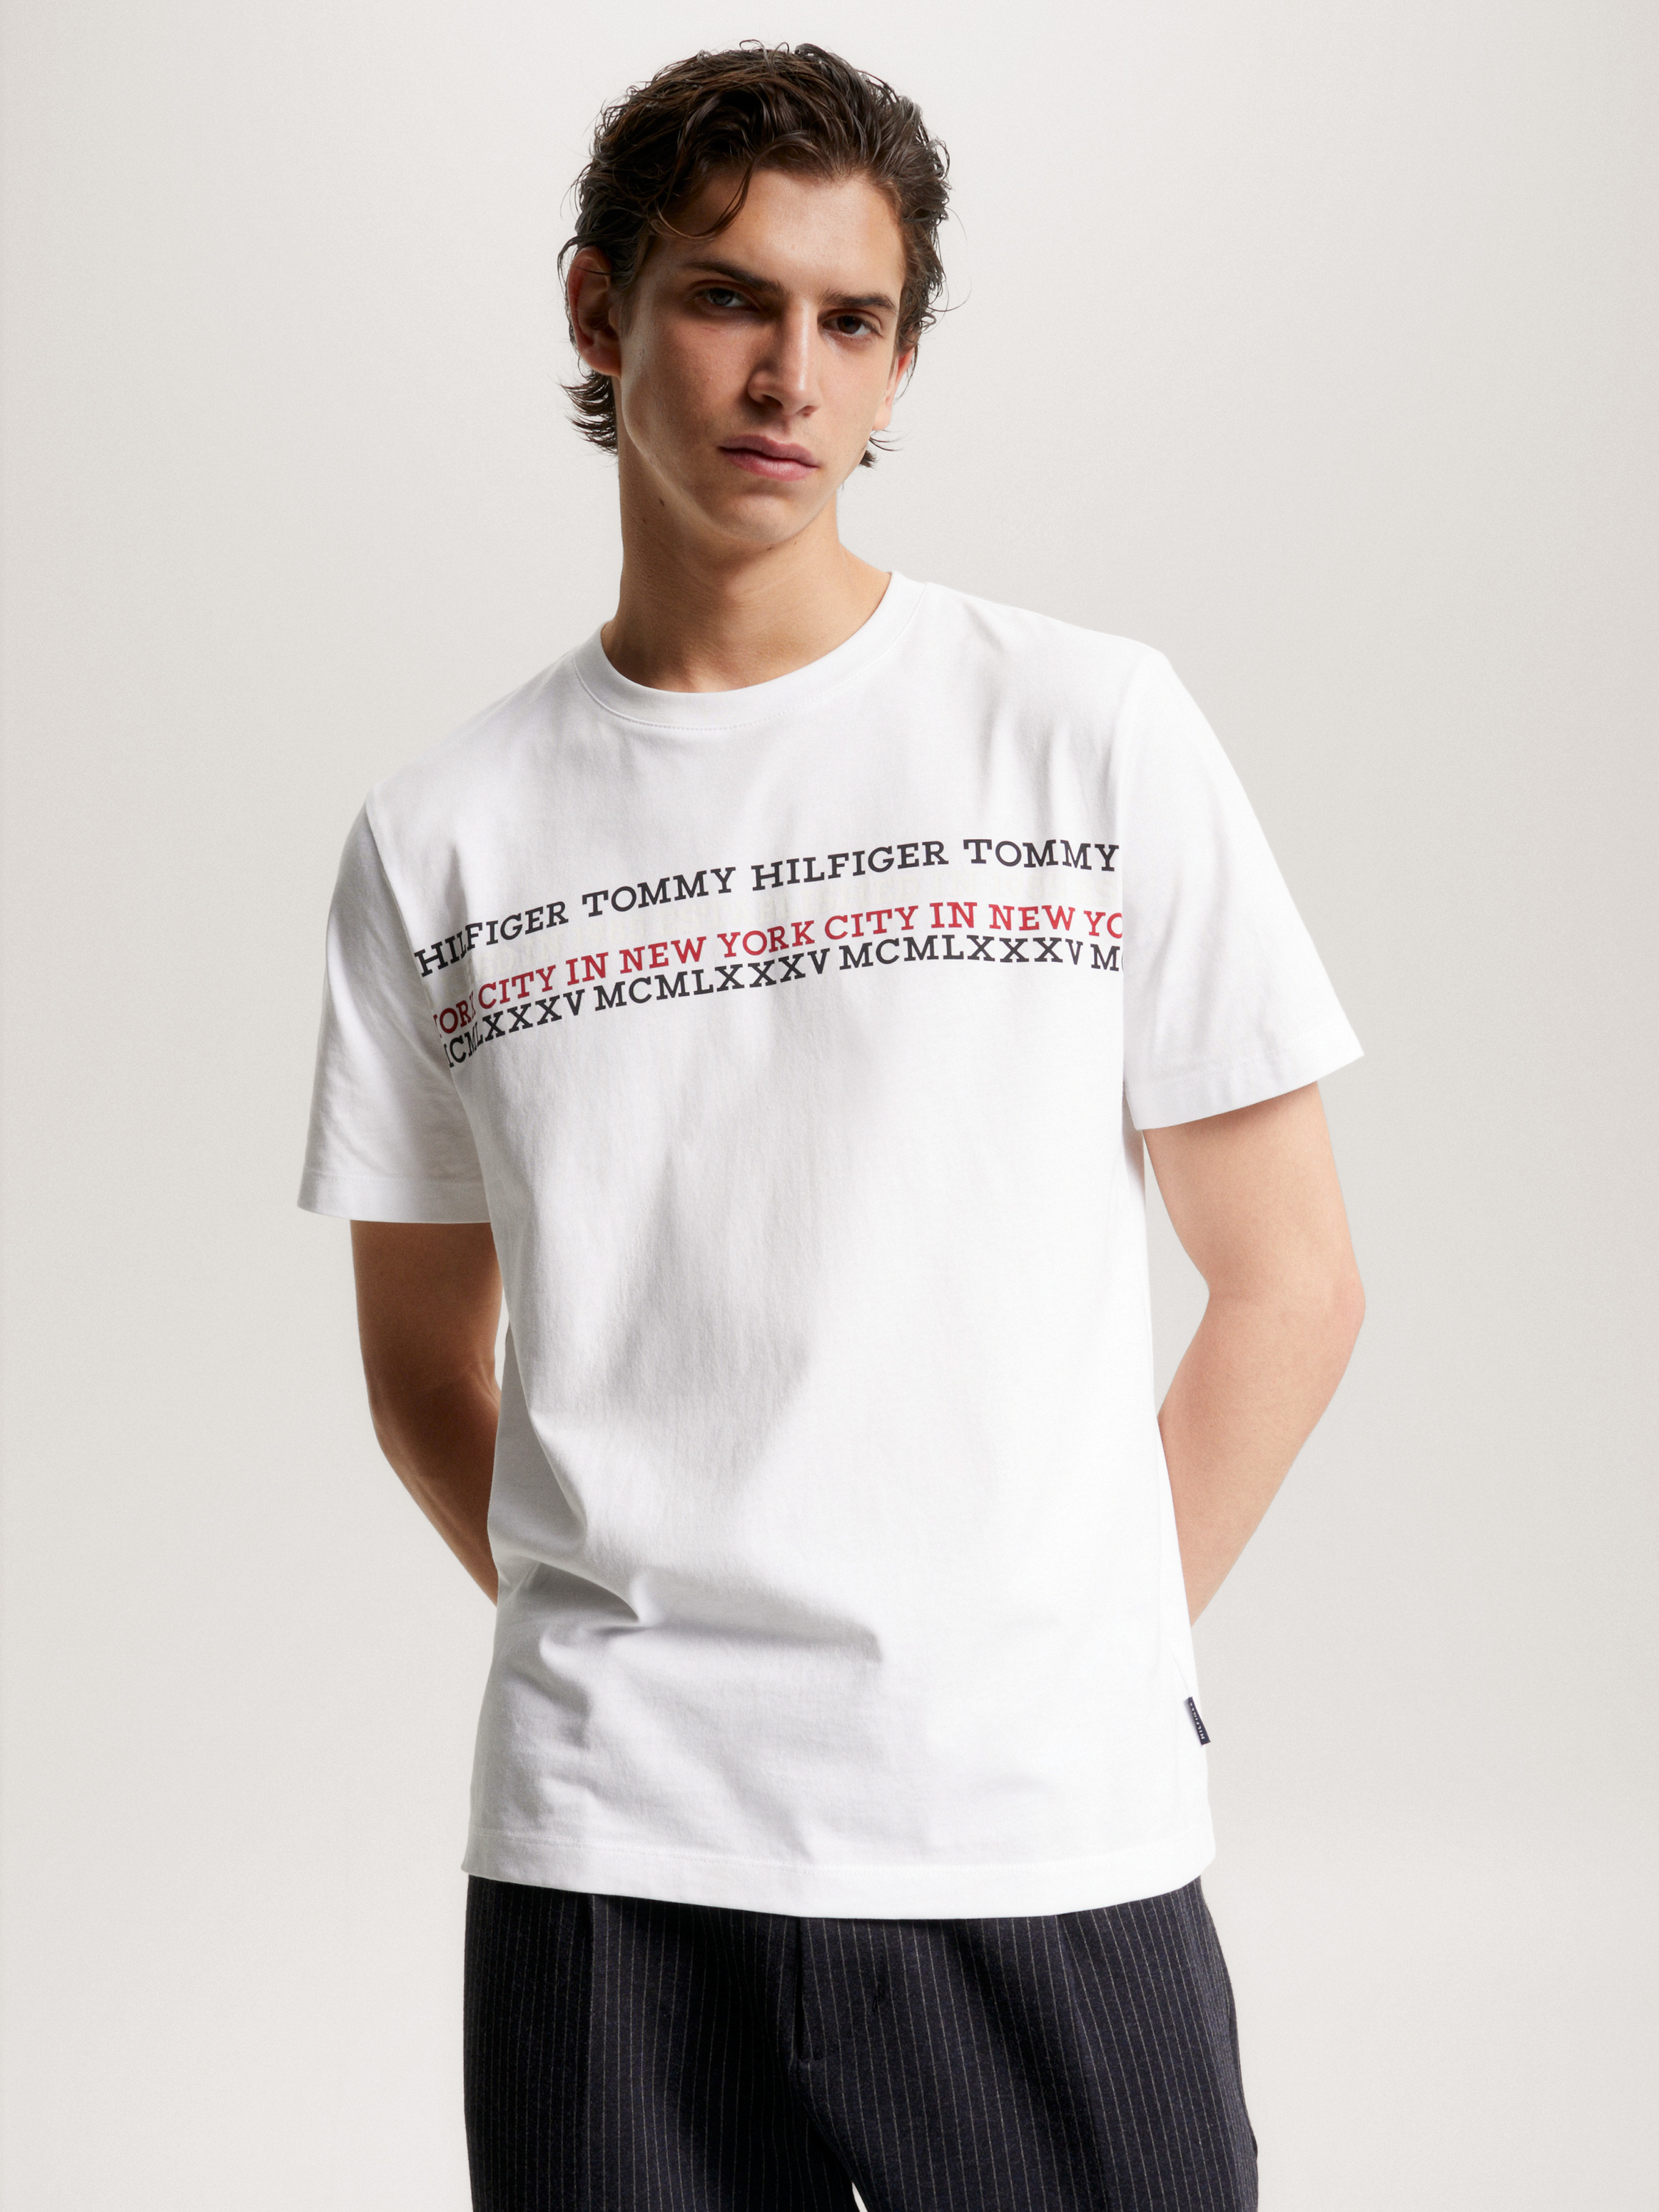 Camiseta Tommy Hilfiger Monotype Chest Stripe Branco - KS MULTIMARCAS